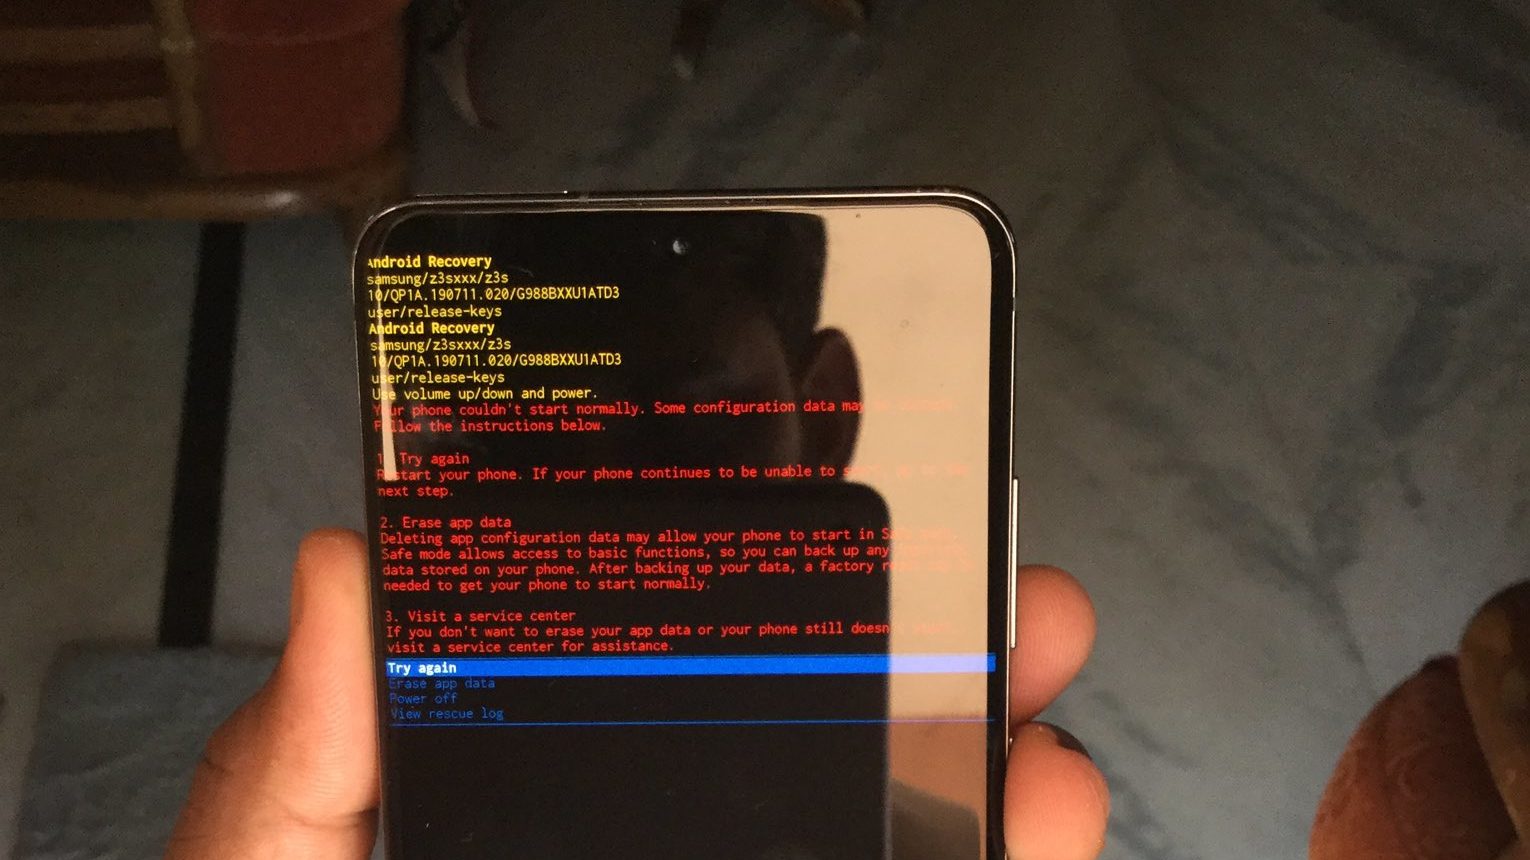 Trying to recover. Erase app data. Приложение рекавери на Android Samsung s2. Экран телефона рекавери. Erase app data на самсунге.